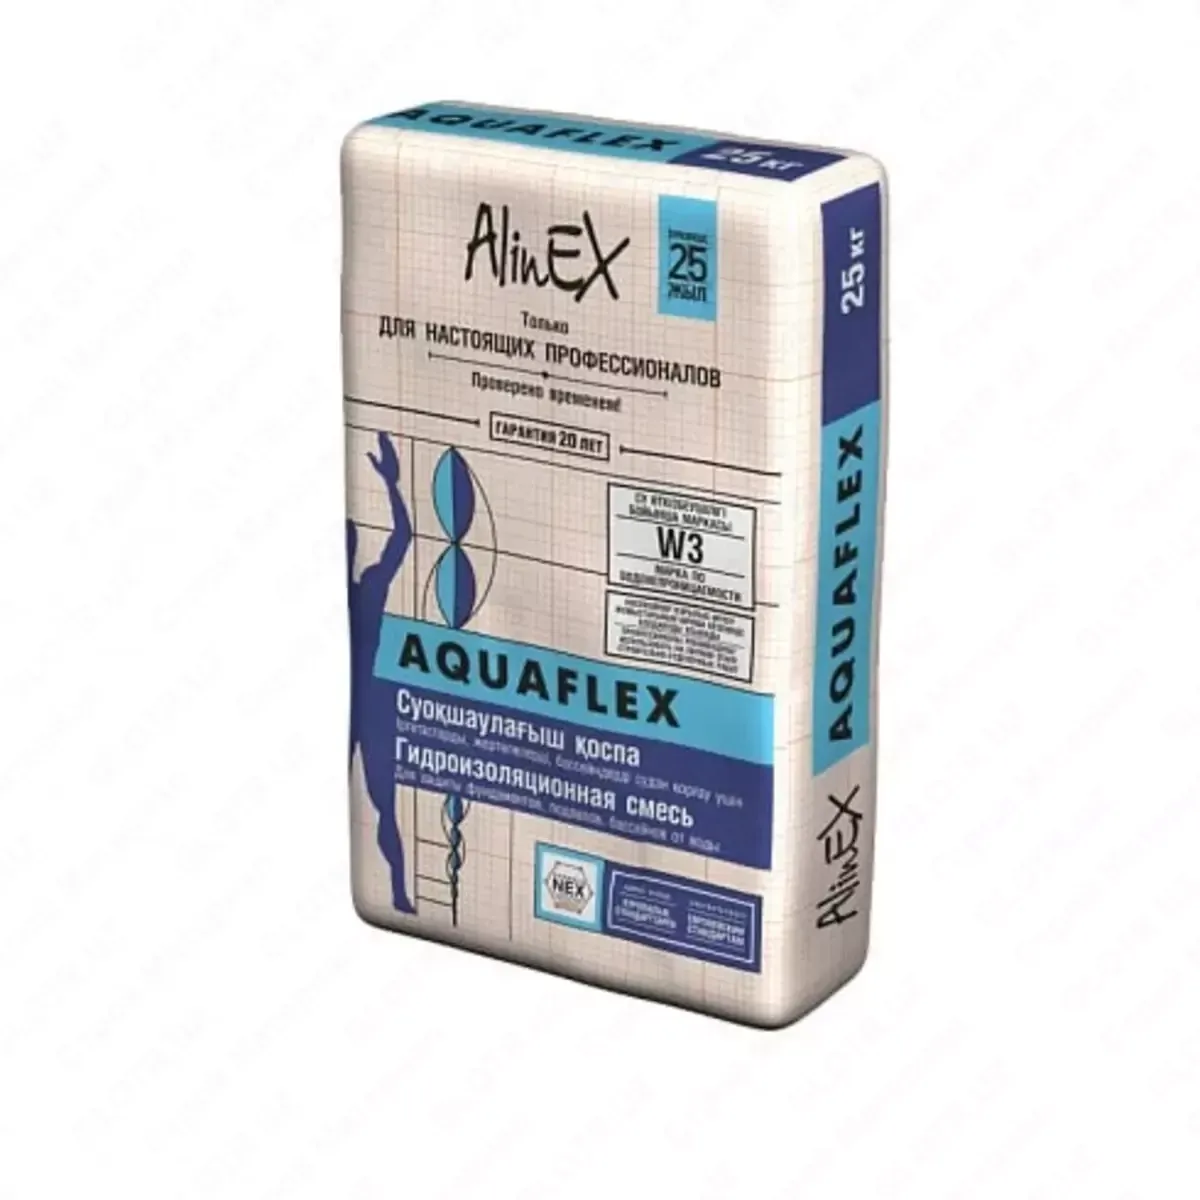 Gidroizolyatsiya Aquaflex 25 kg ALINEX#1